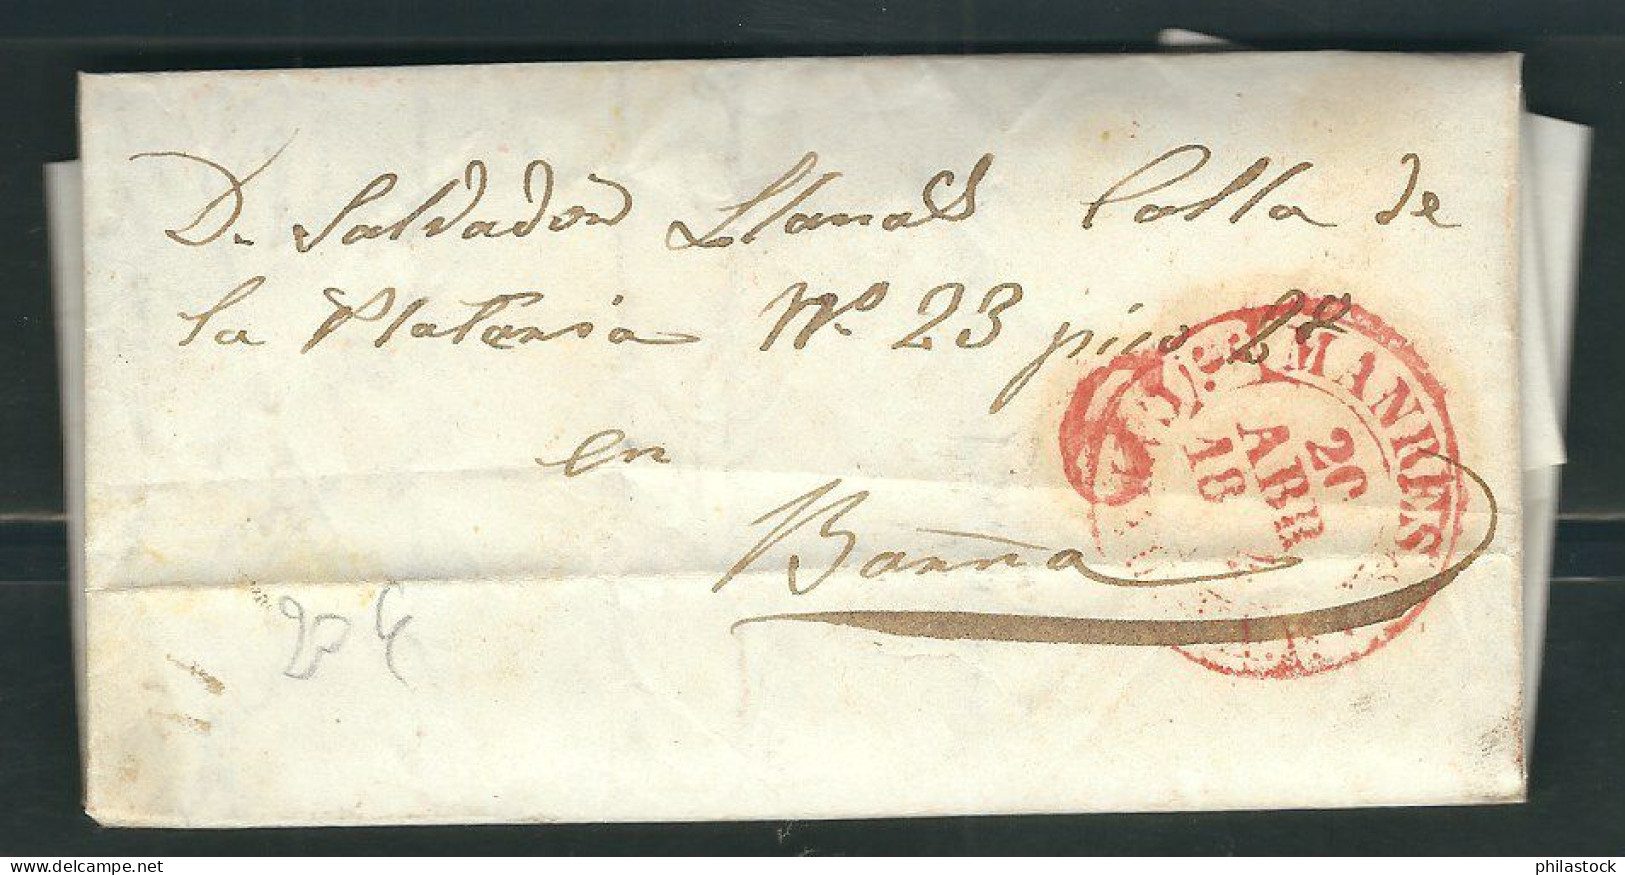 ESPAGNE 1844 Marque Postale  Taxée De Manresa - ...-1850 Prephilately